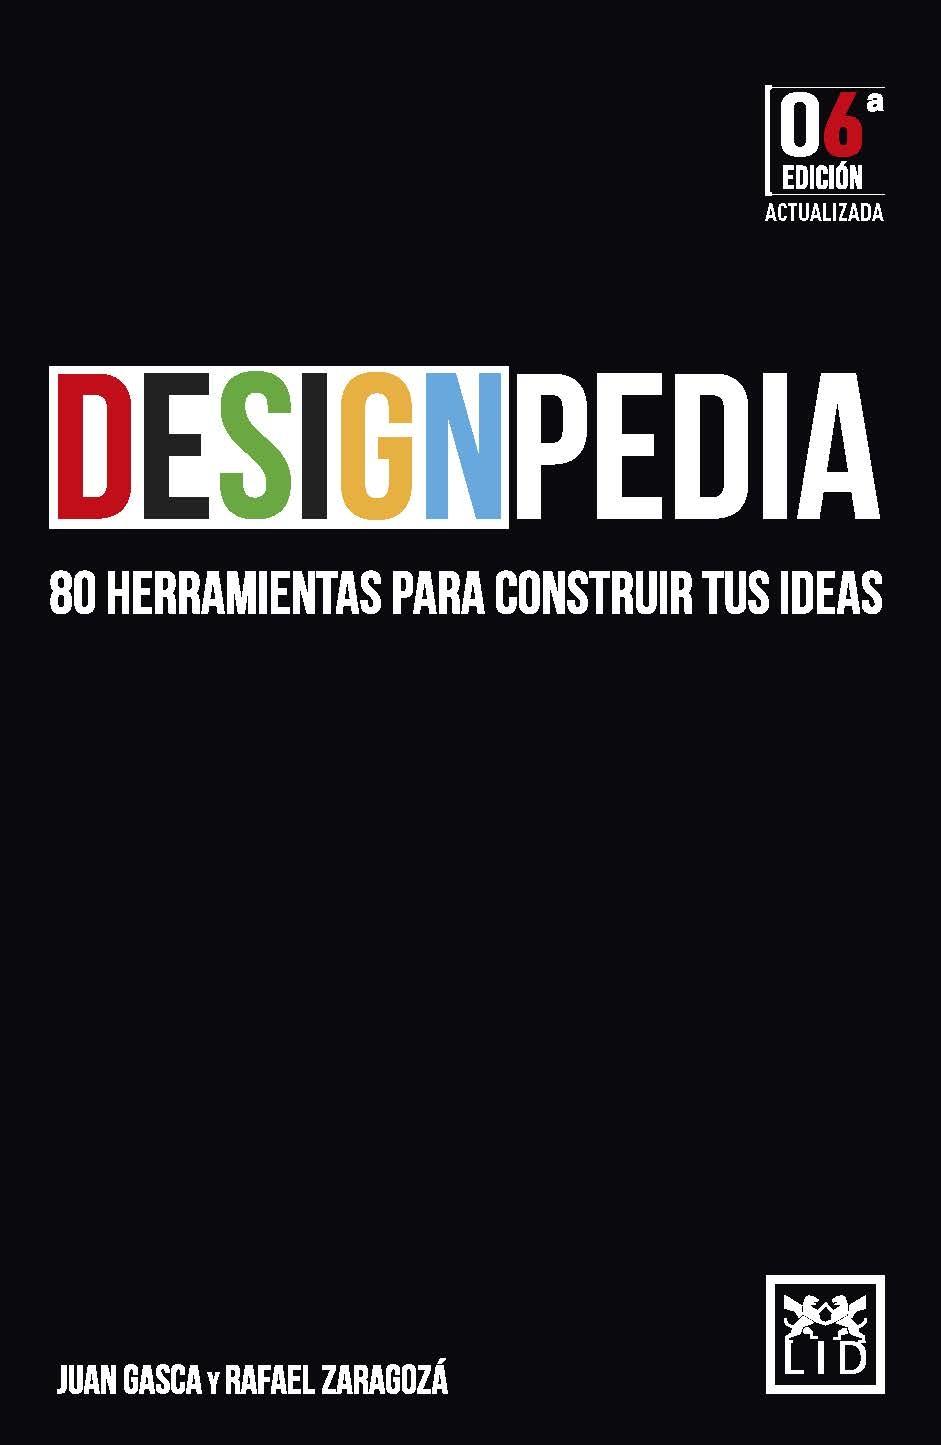 DESIGNPEDIA "80 HERRAMIENTAS PARA CONSTRUIR TUS IDEAS". 